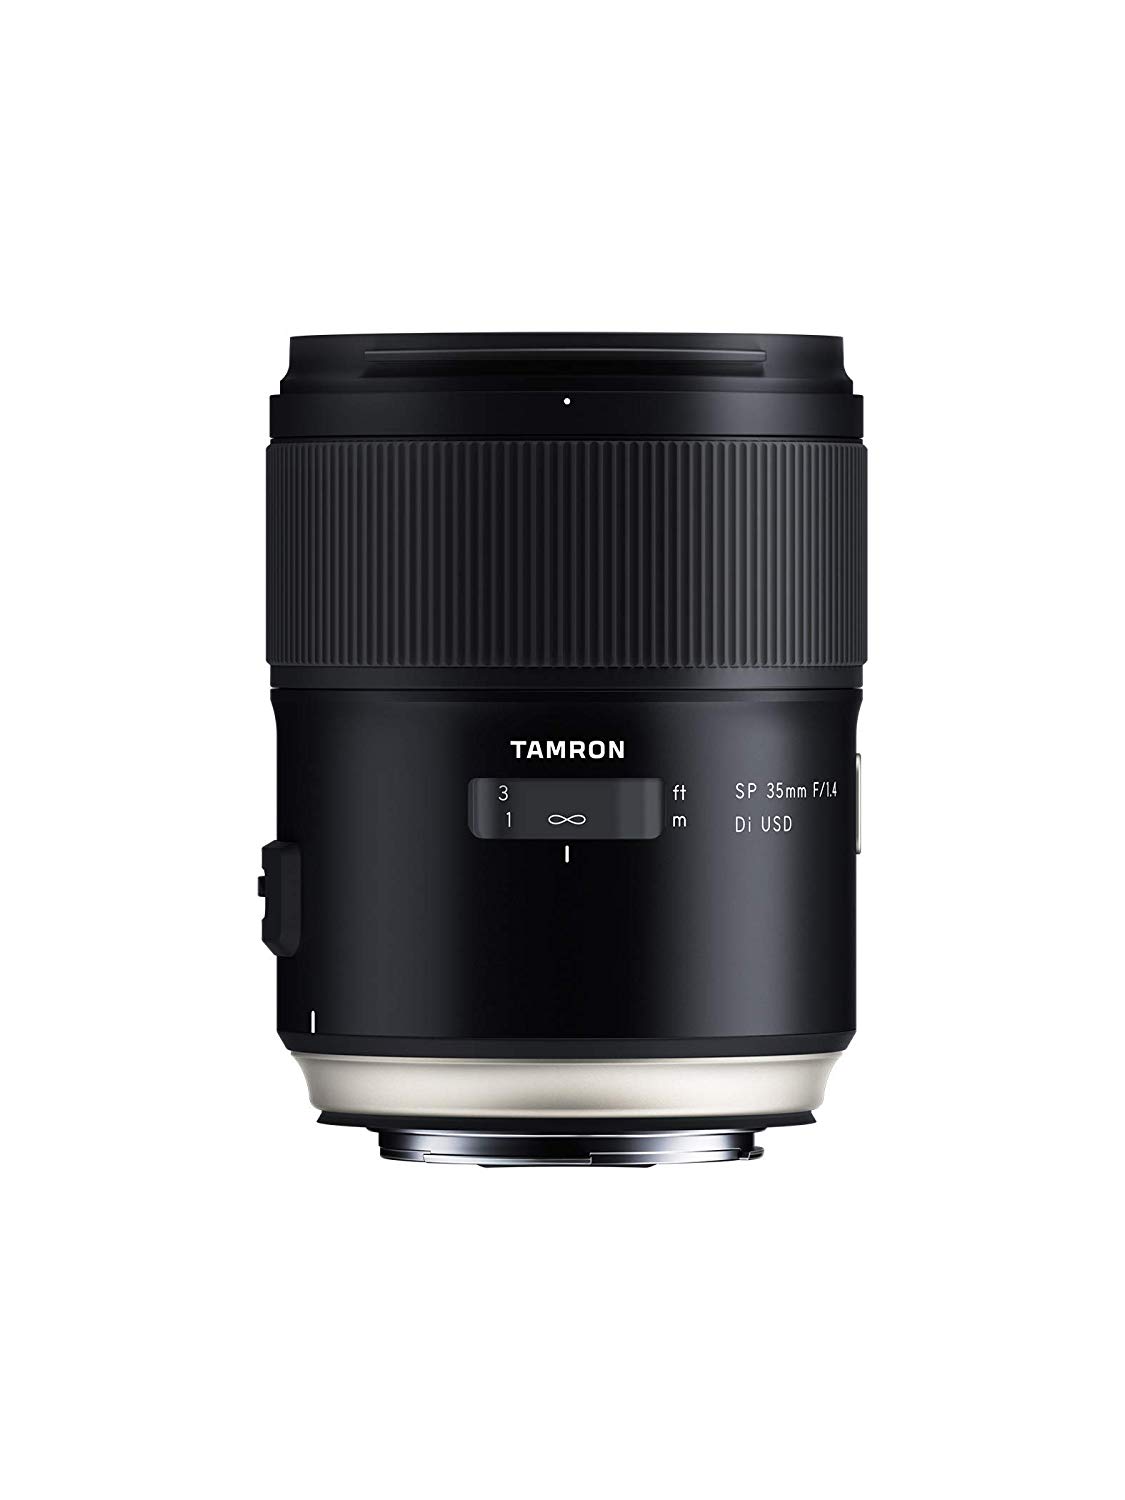 Tamron Objectif  SP 35mm f/1.4 di USD pour Canon EF